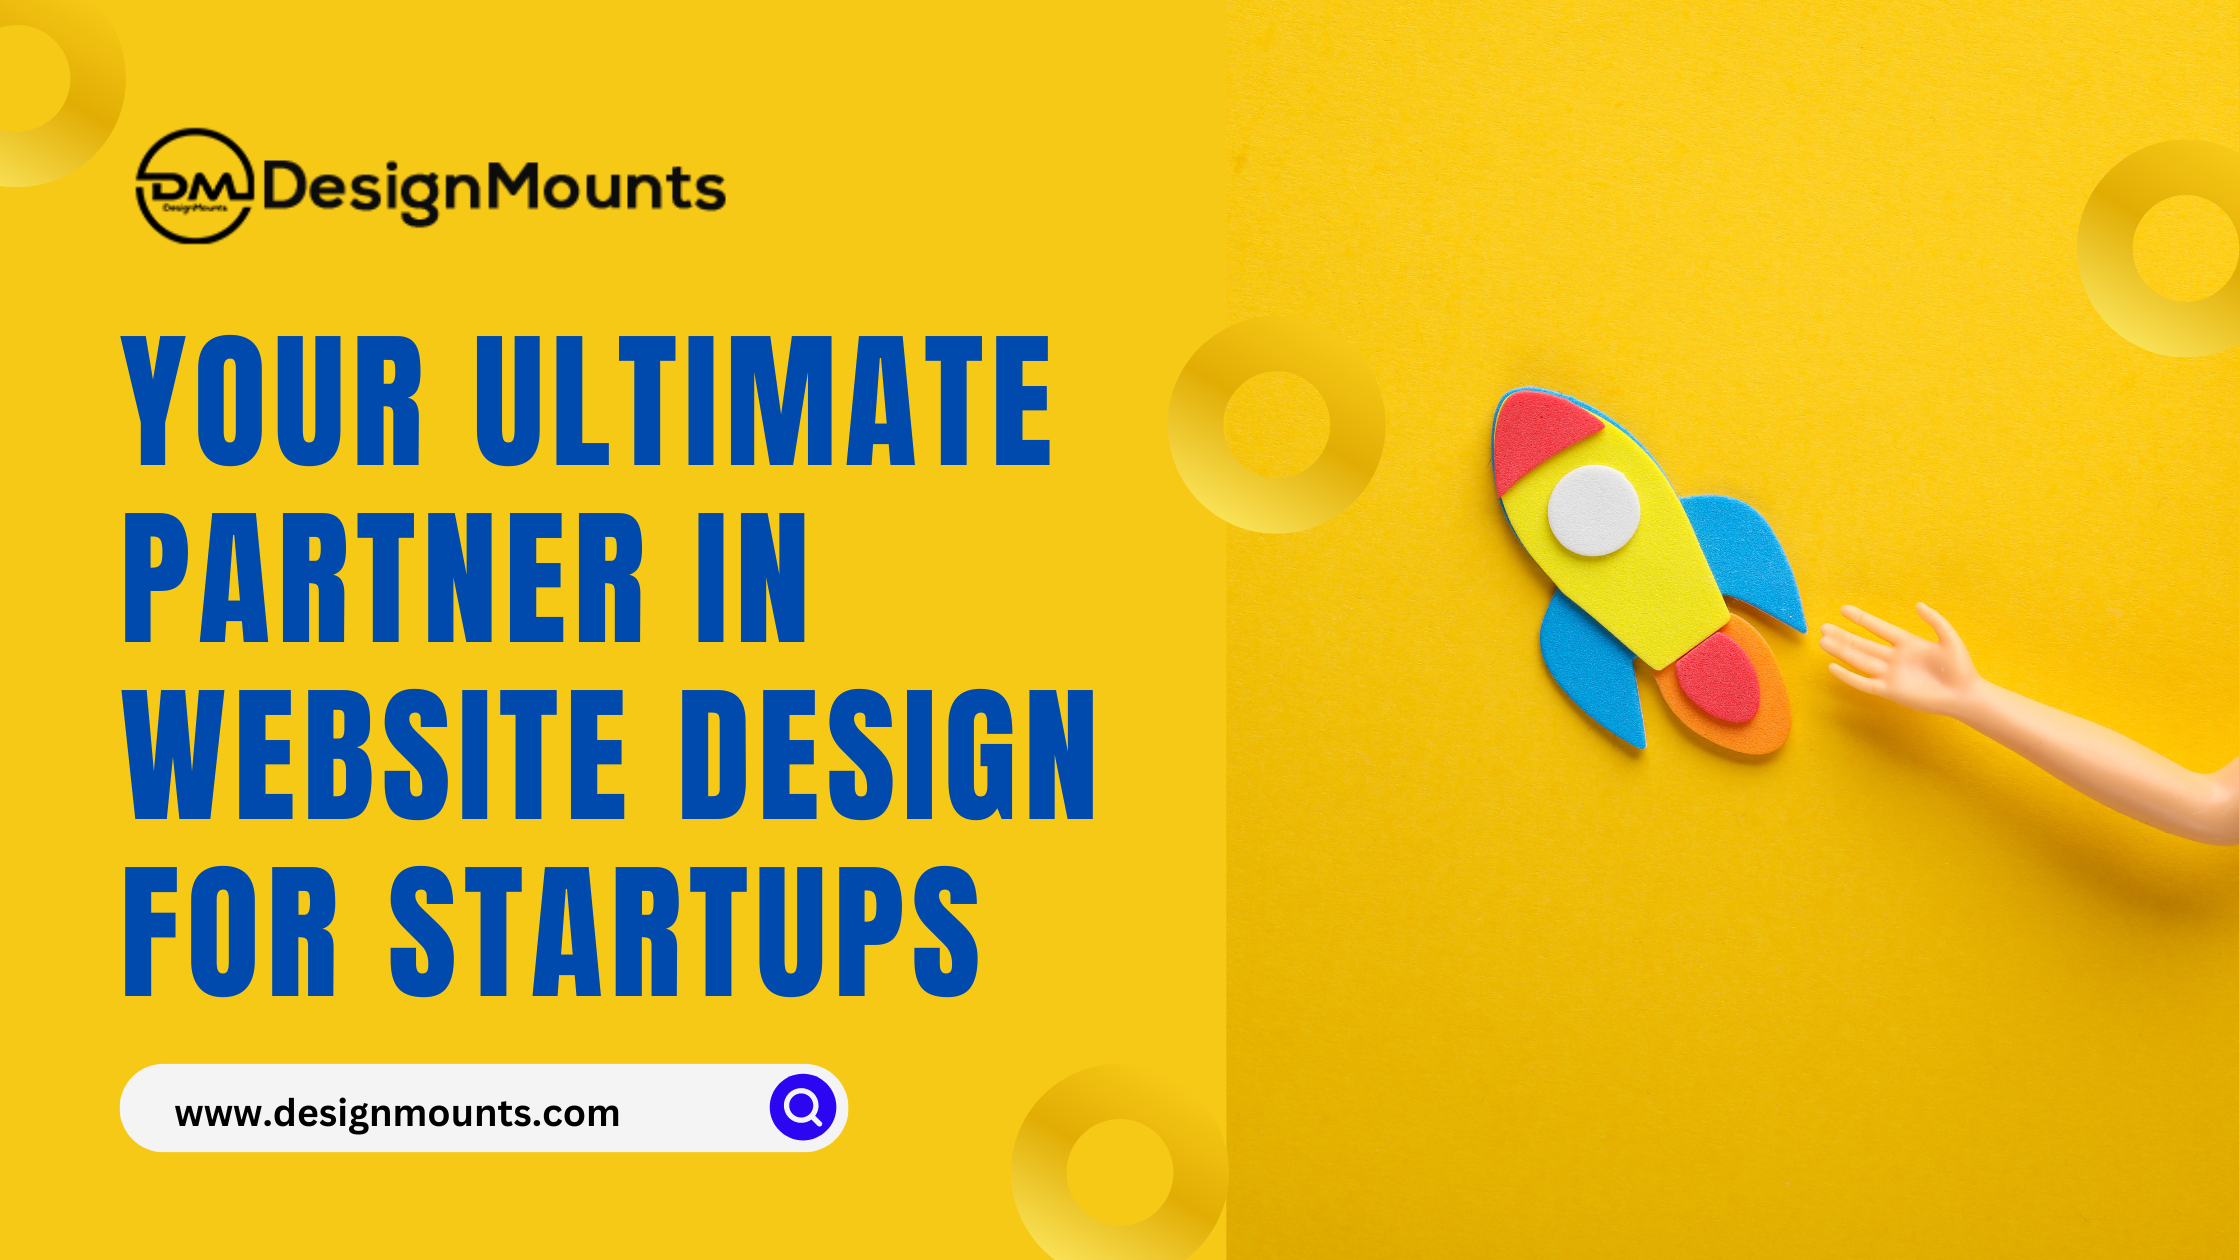 designmounts-website-design-for-startups